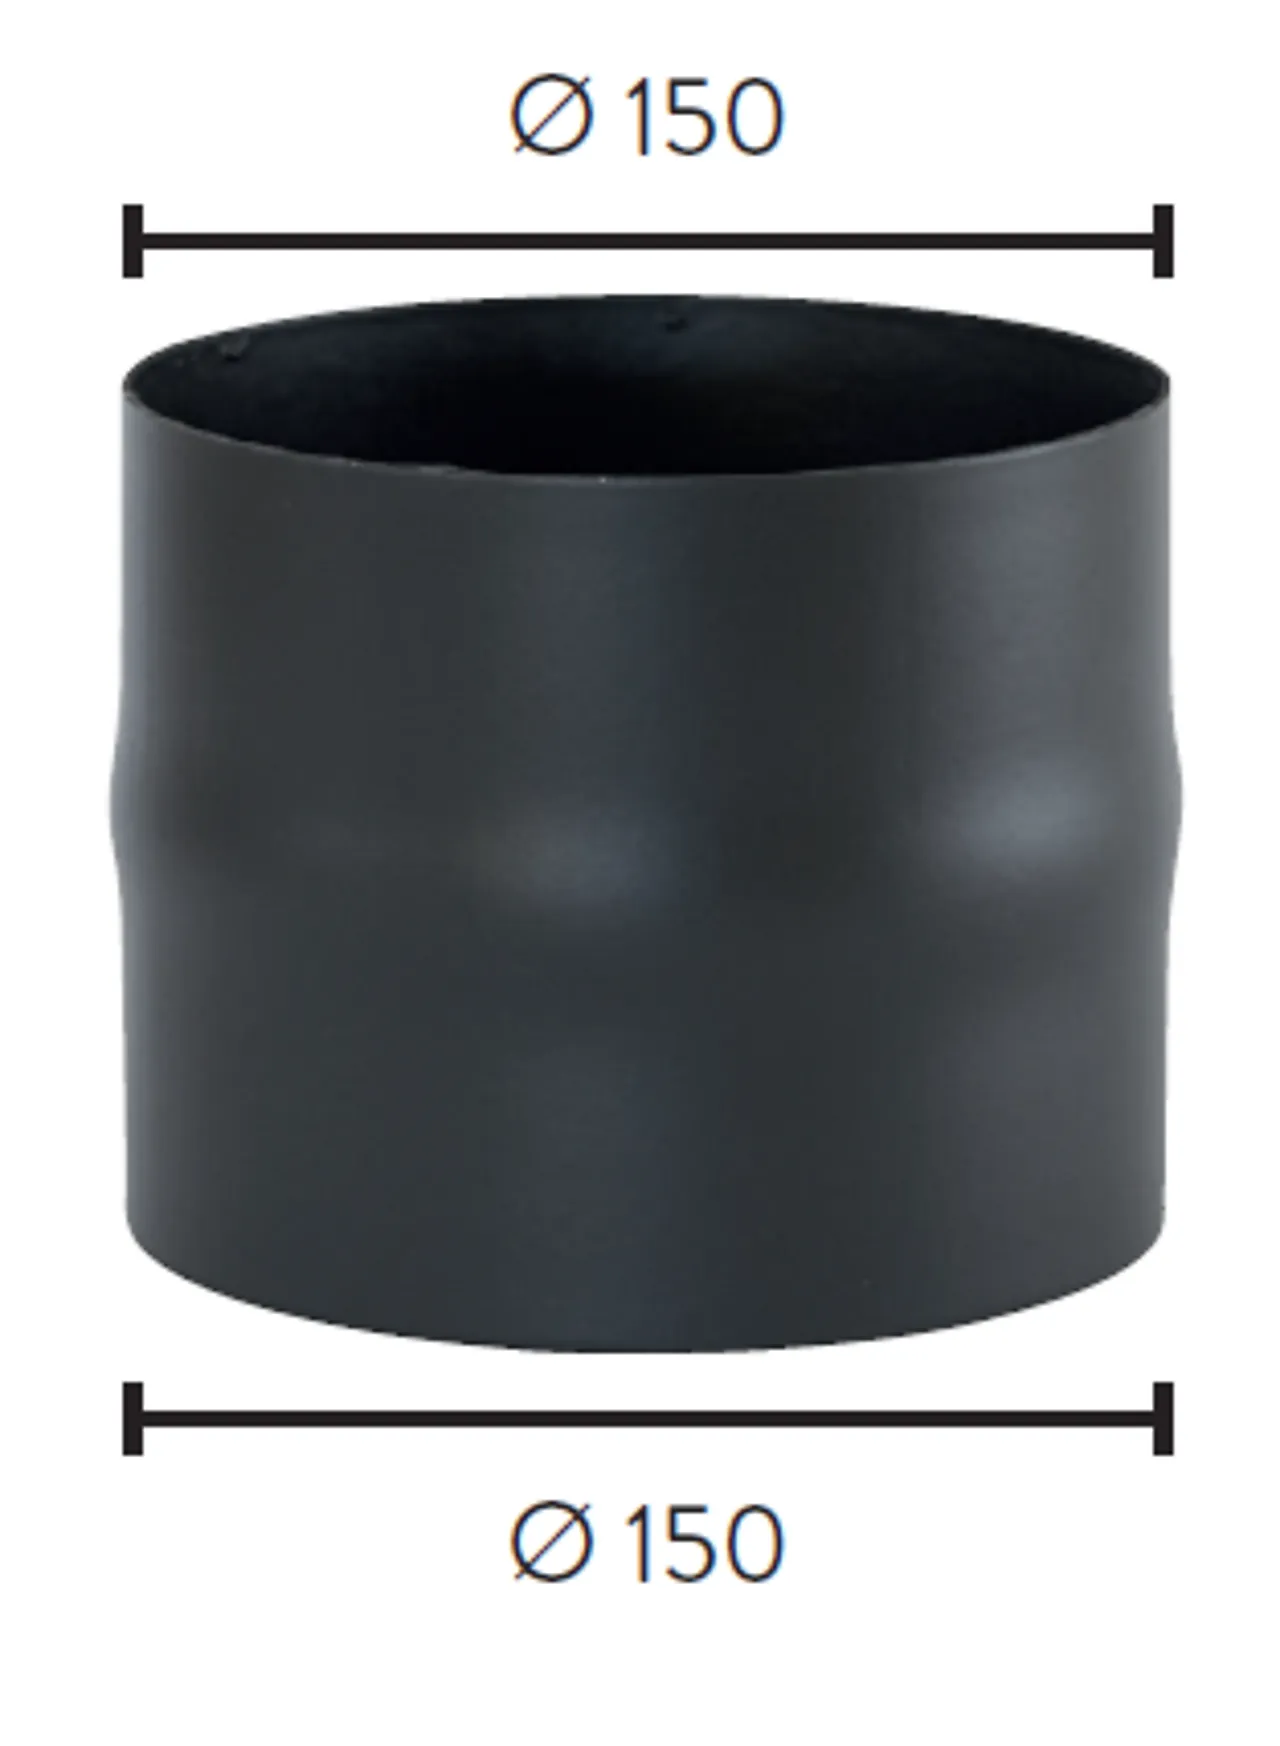 Røykrør ø150-ø150 skjøtestykke bp sort metallic silkematt lakk 2,0mm